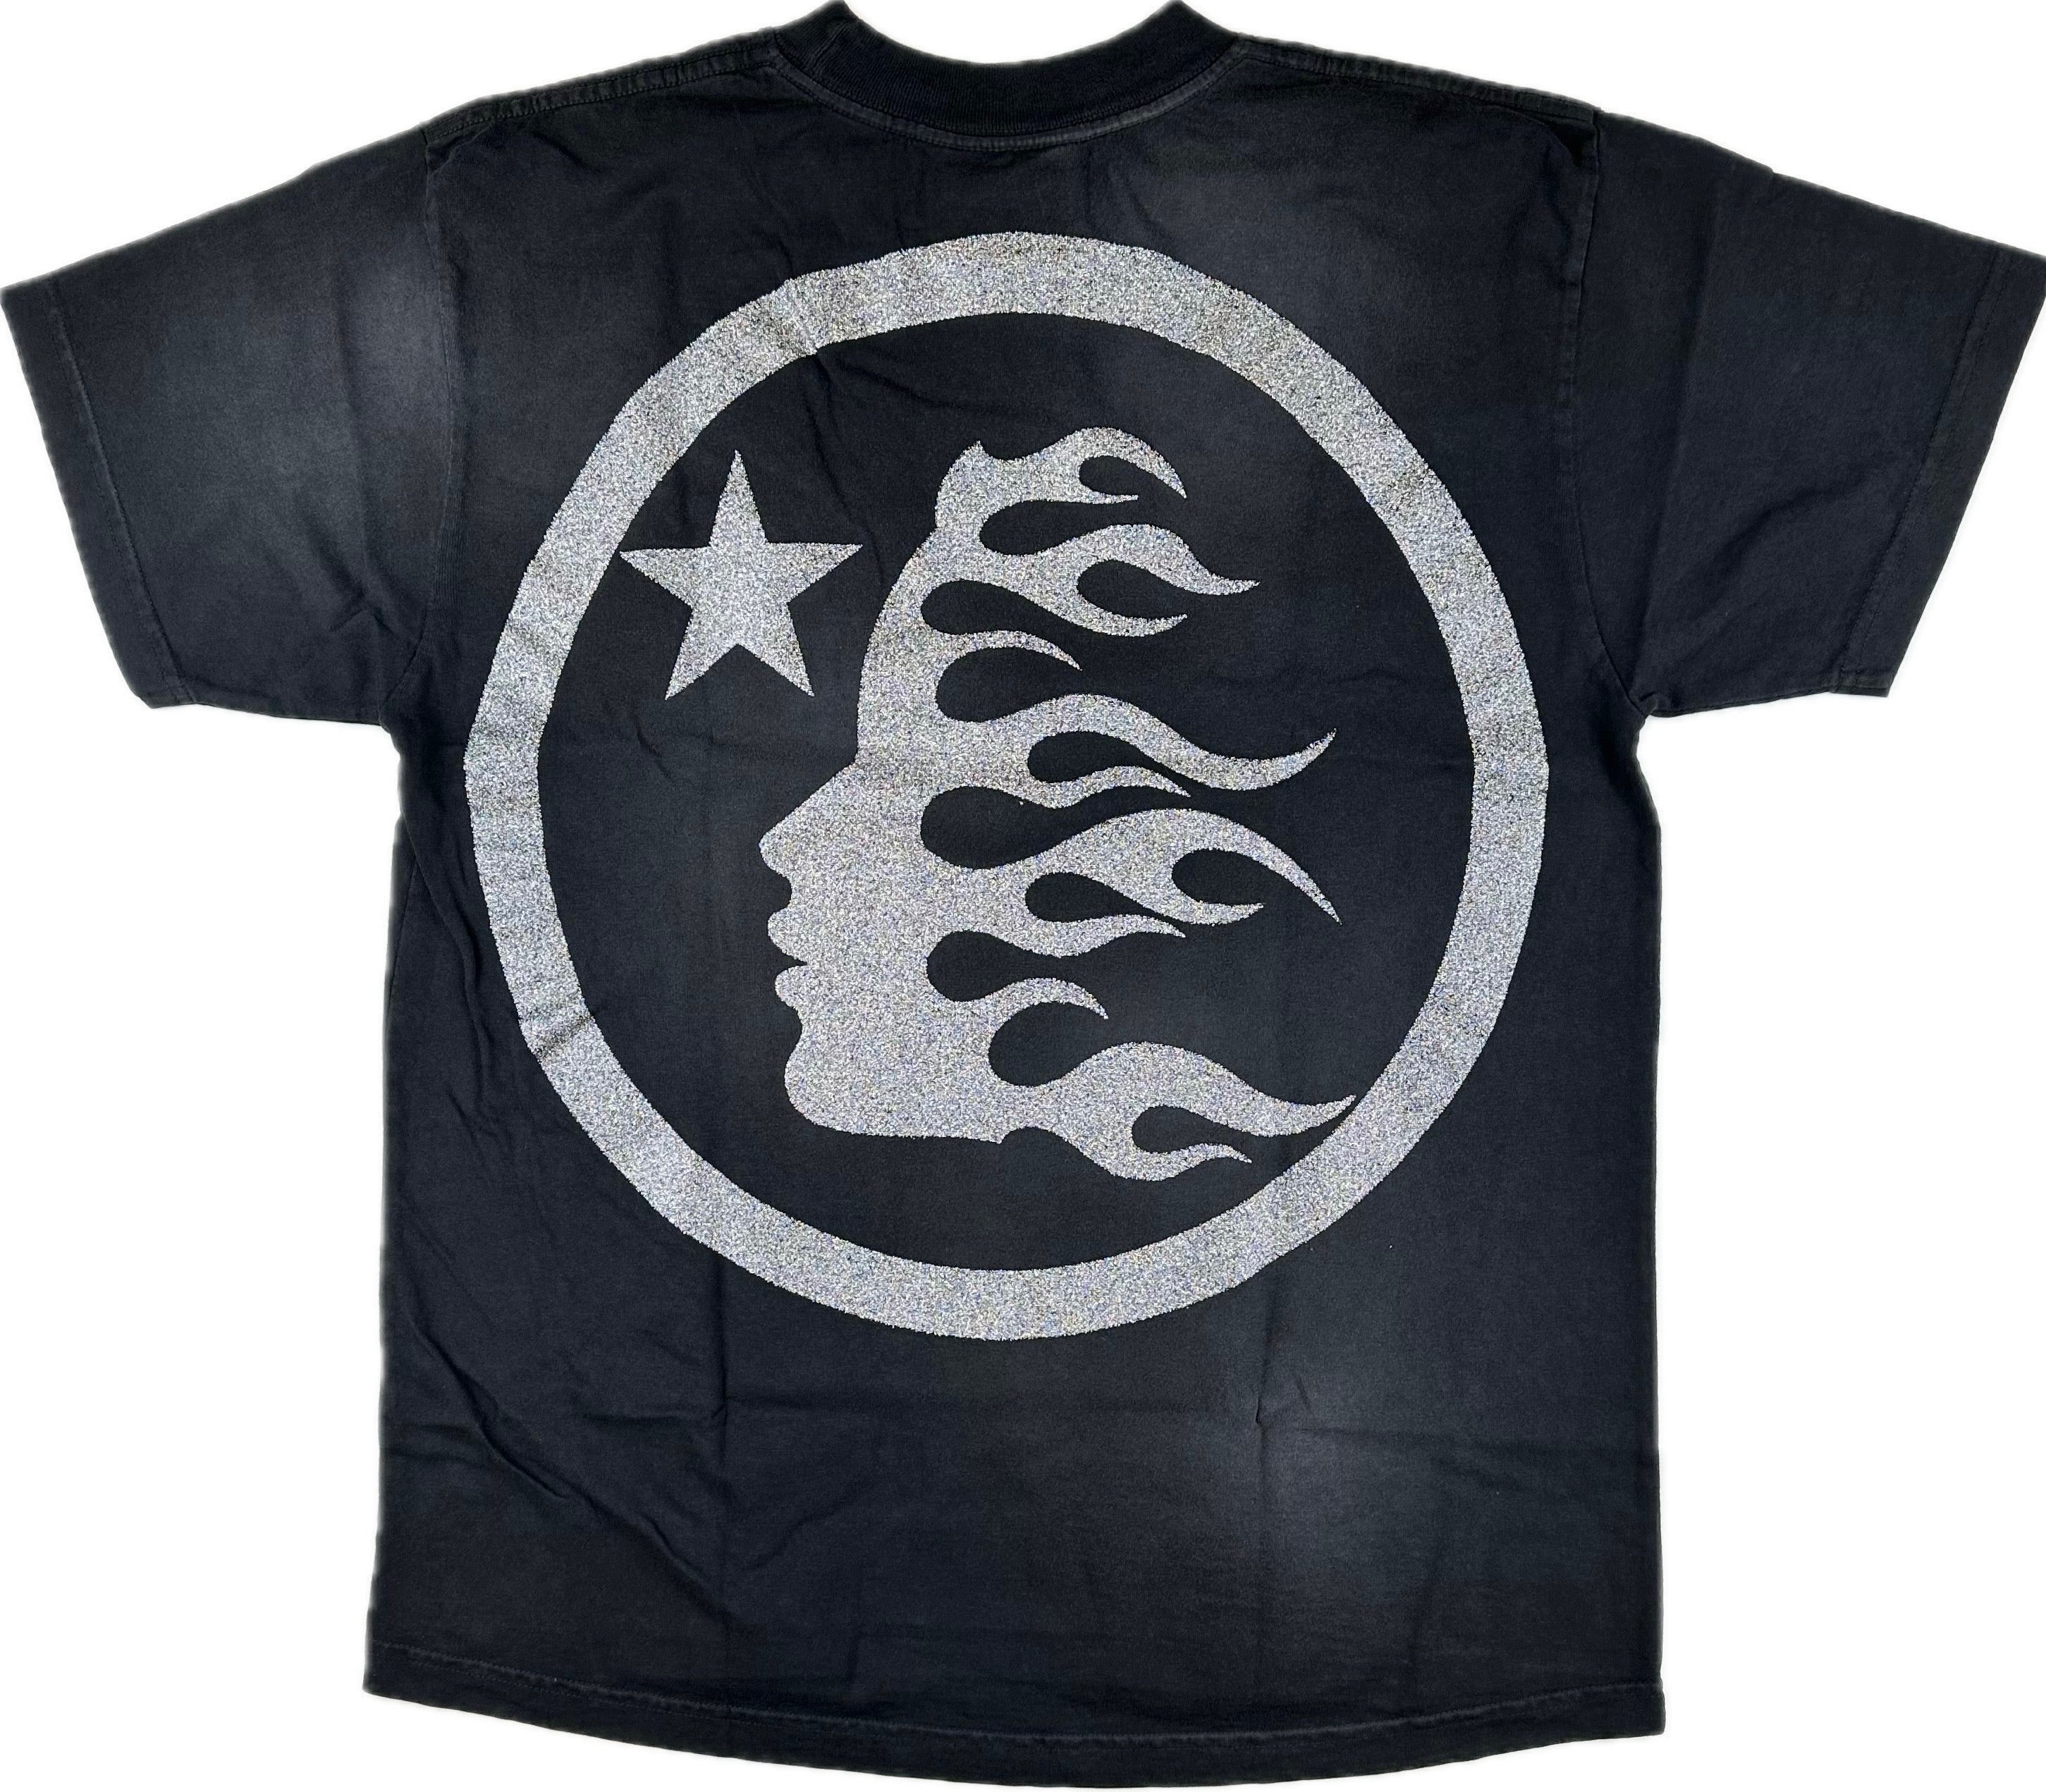 Hellstar Sport Logo Gel T-Shirt Black/Grey Sparkle